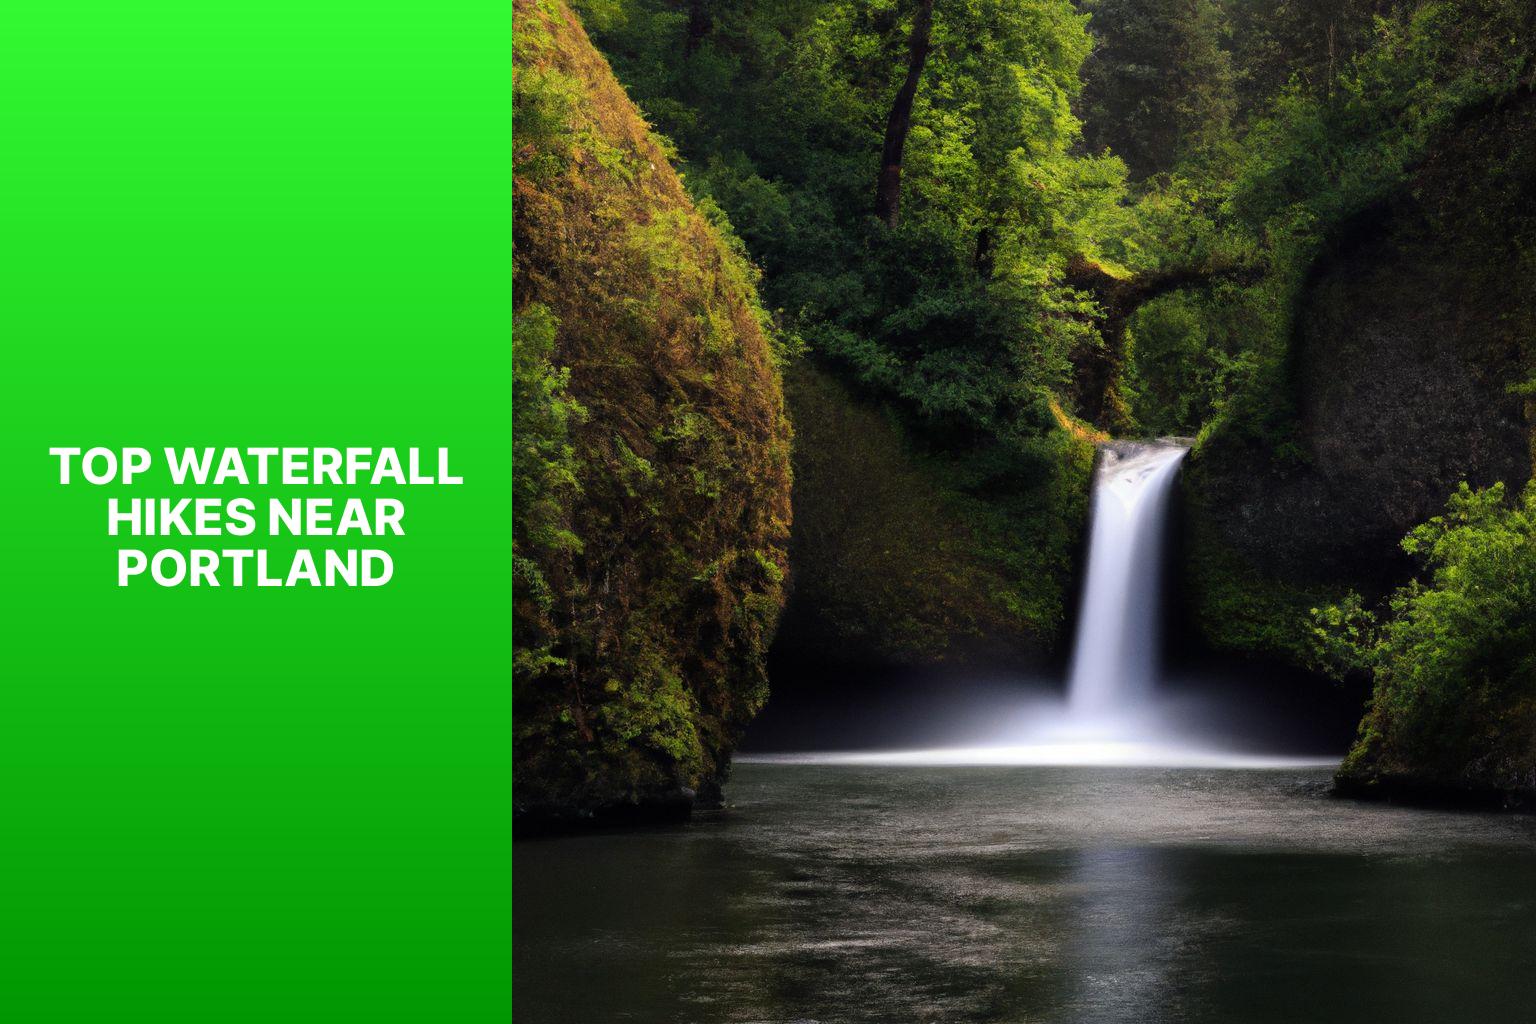 Top Waterfall Hikes Near Portland - Waterfall Hikes Near Portland 